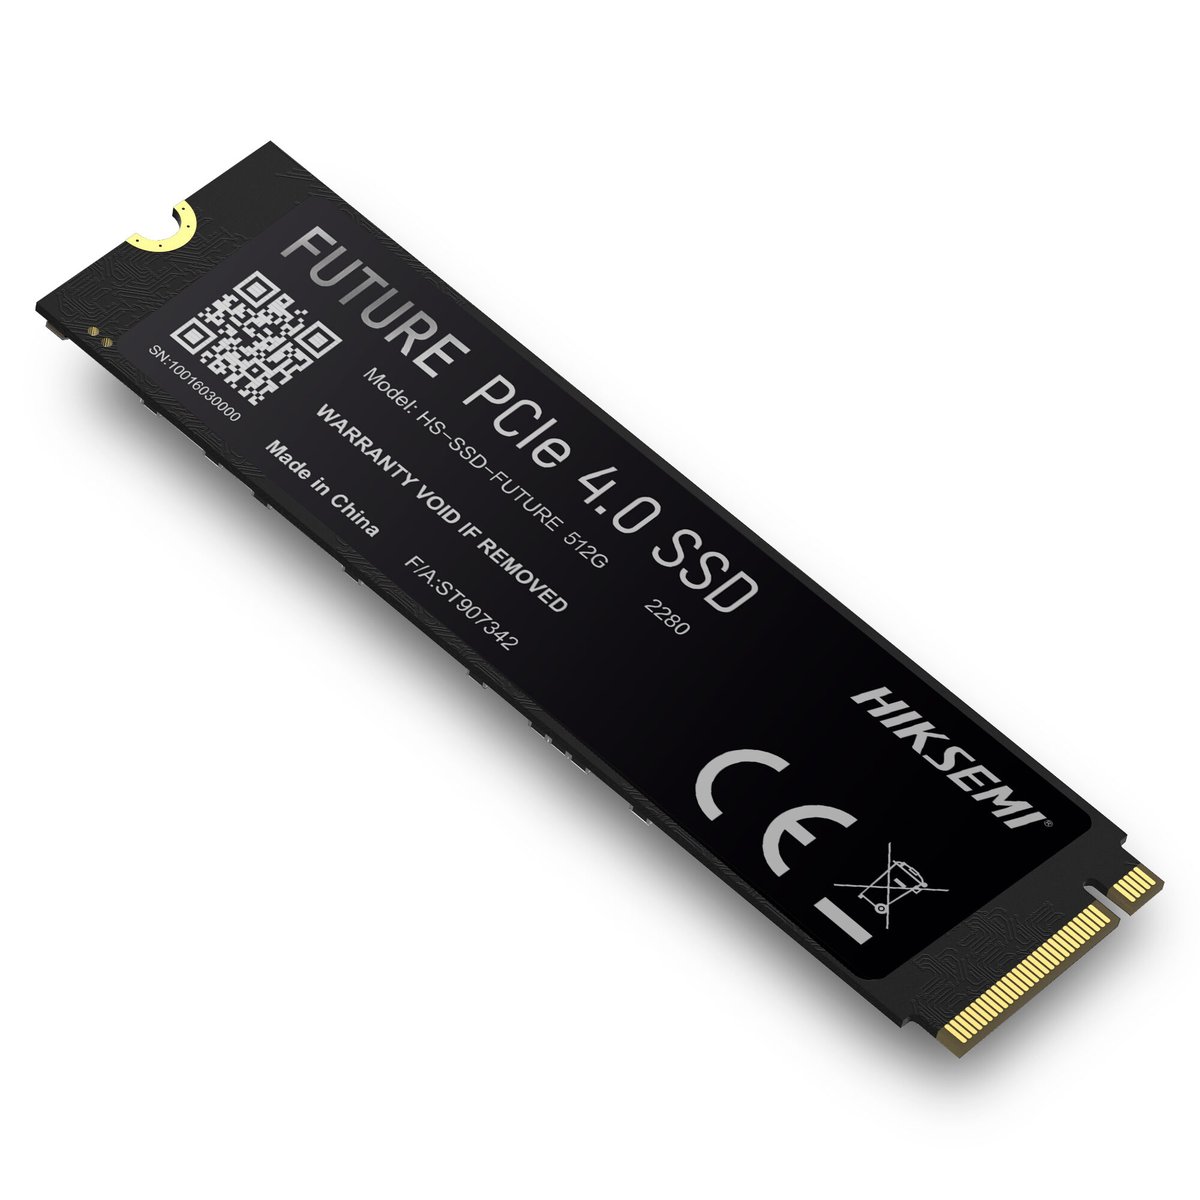 HIKSEMI(ハイクセミ) FUTURE 内蔵SSD NVMe PCIe Gen 4×4 PS5確認済み 国内正規品 メーカー5年保証 【送料無料】